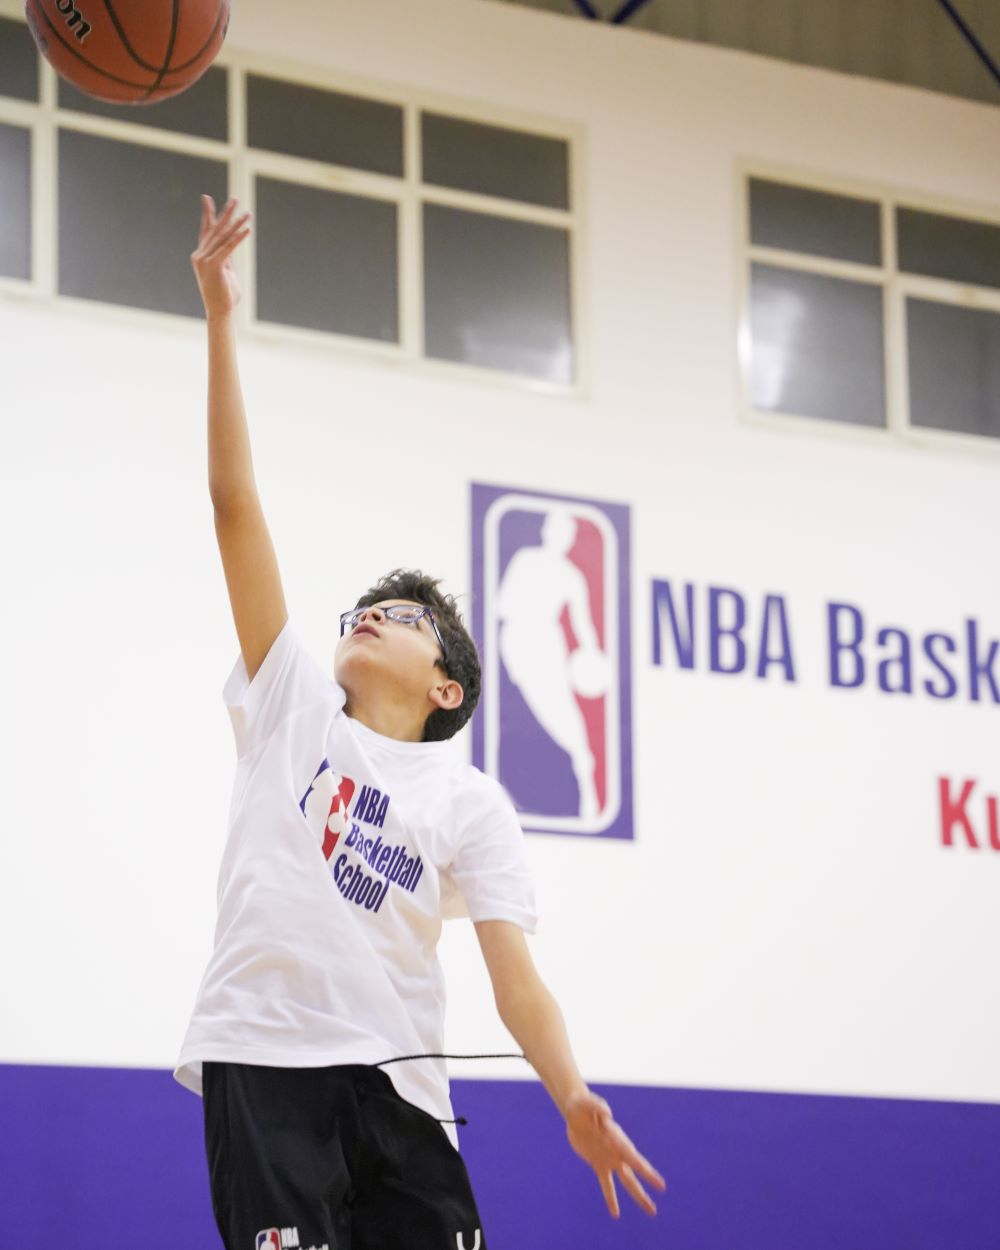 NBA Basketball School Kuwait trains next generation of athletes